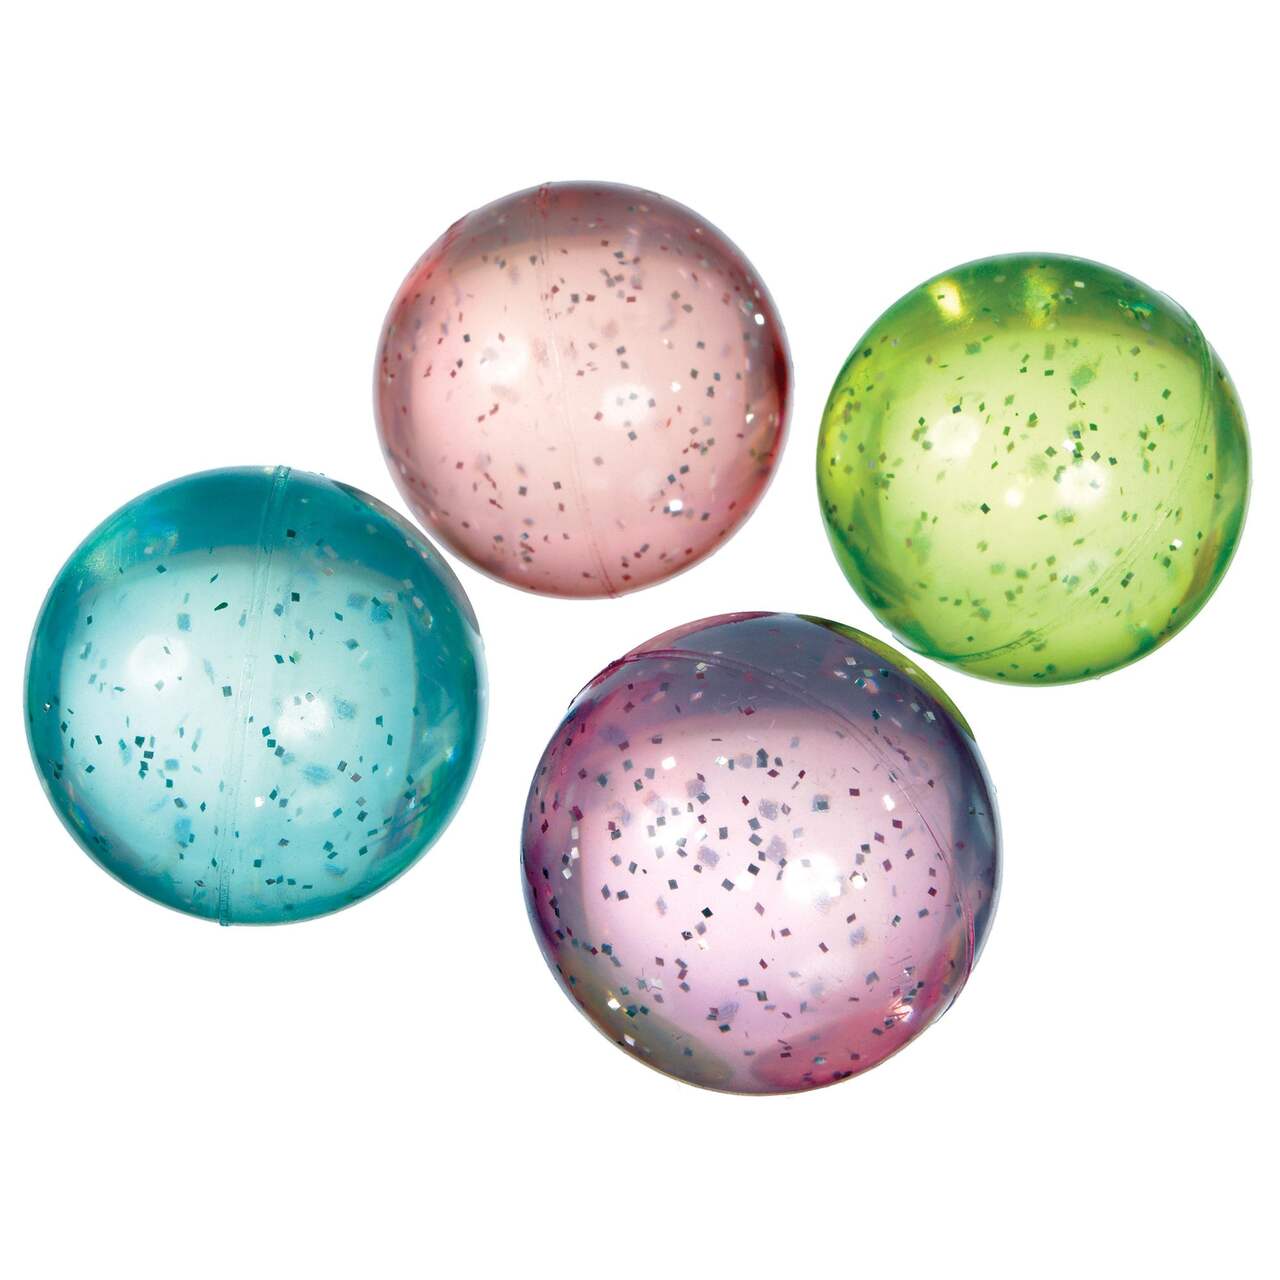 Rubber & Plastic Crazy ball Set (Multicolour) - 24 Balls (Standard Size)